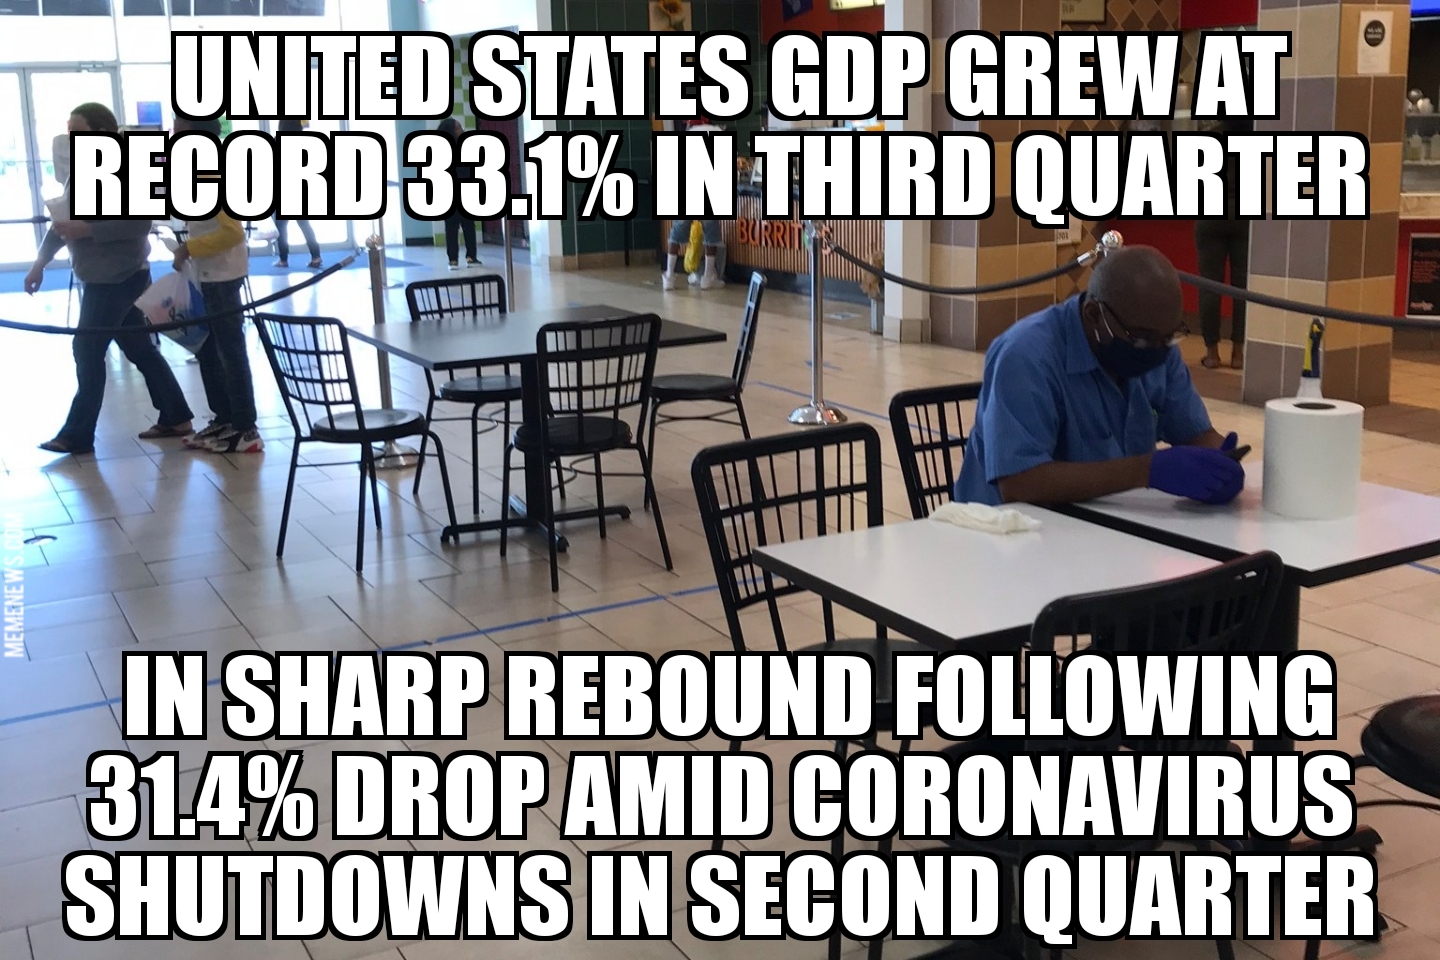 U.S. GDP up 33.1% in third quarter